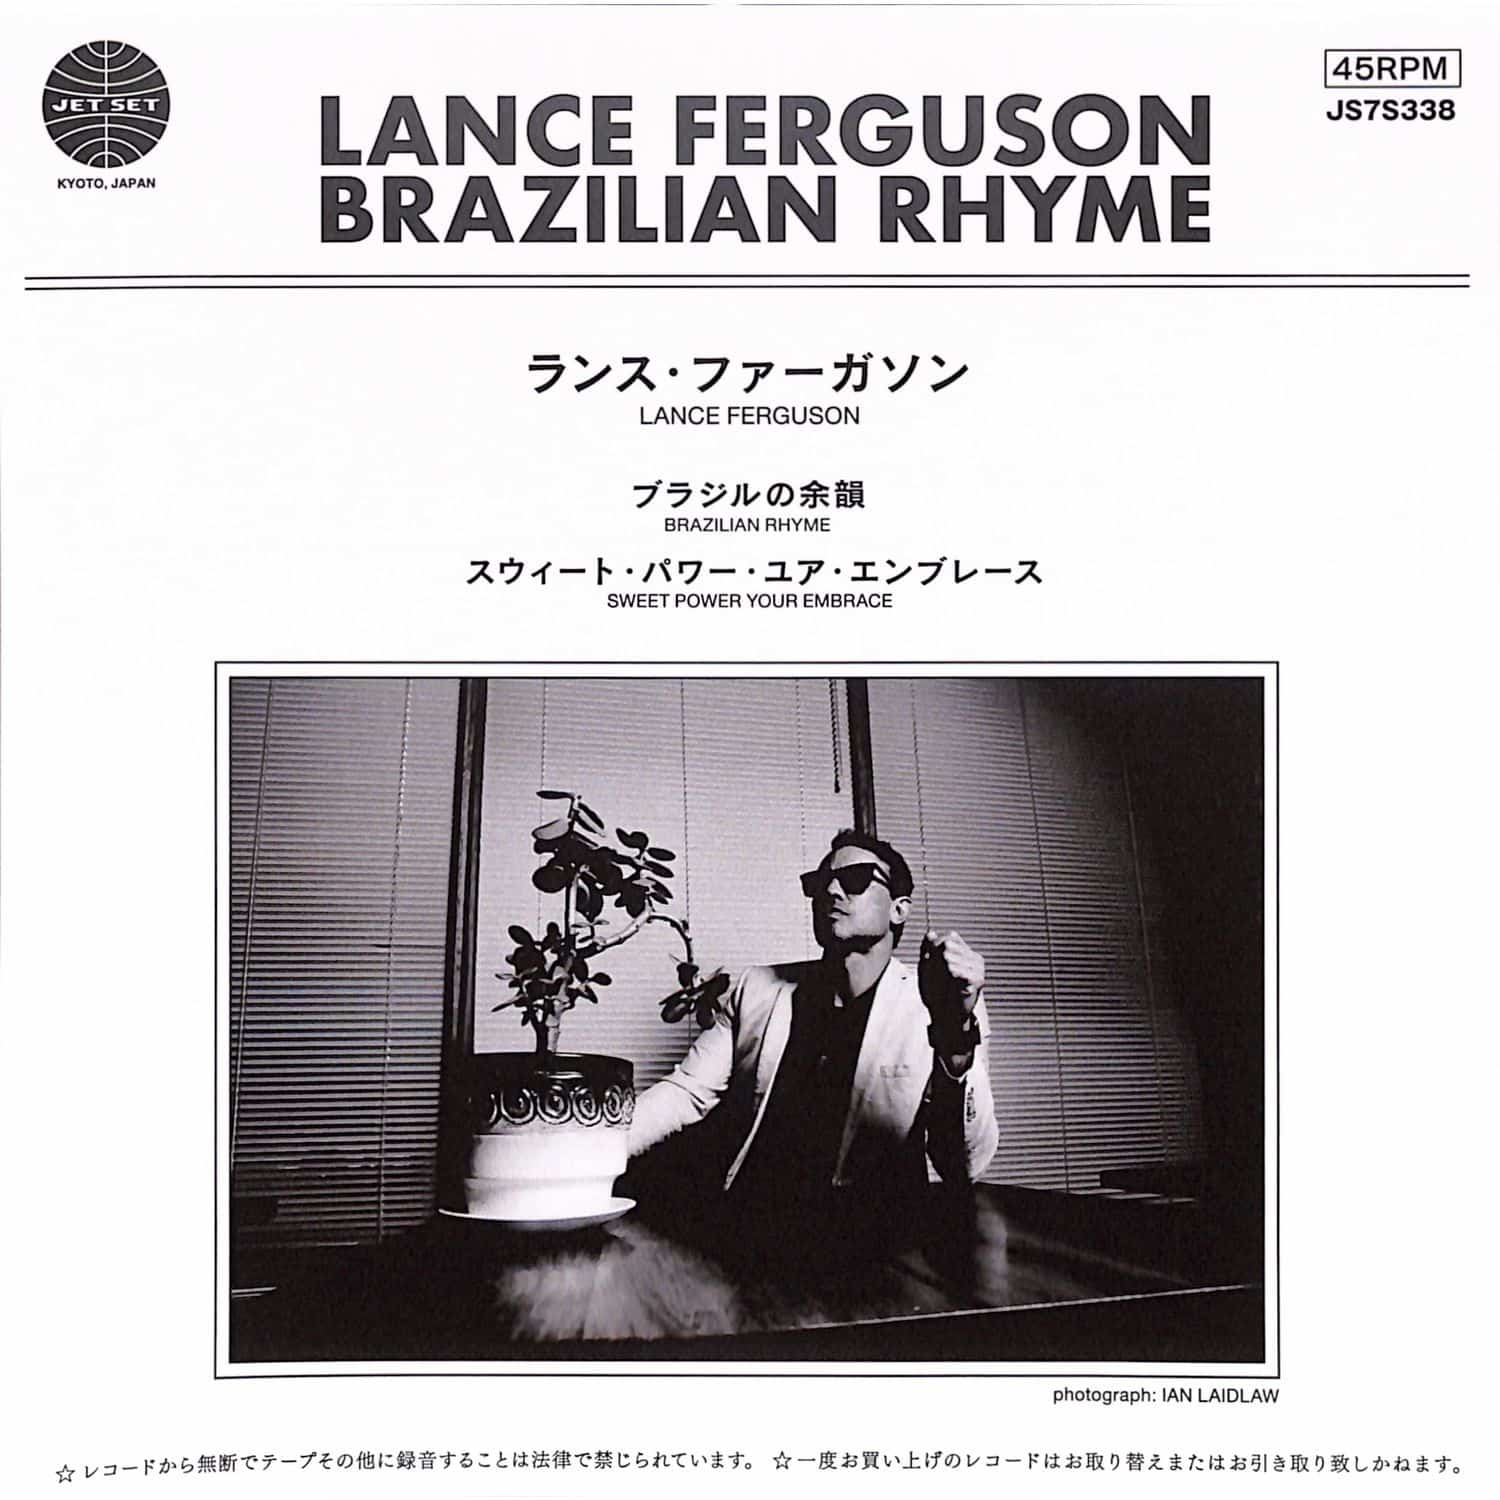 Lance Ferguson - BRAZILIAN RHYME / SWEET POWER YOUR EMBRACE 